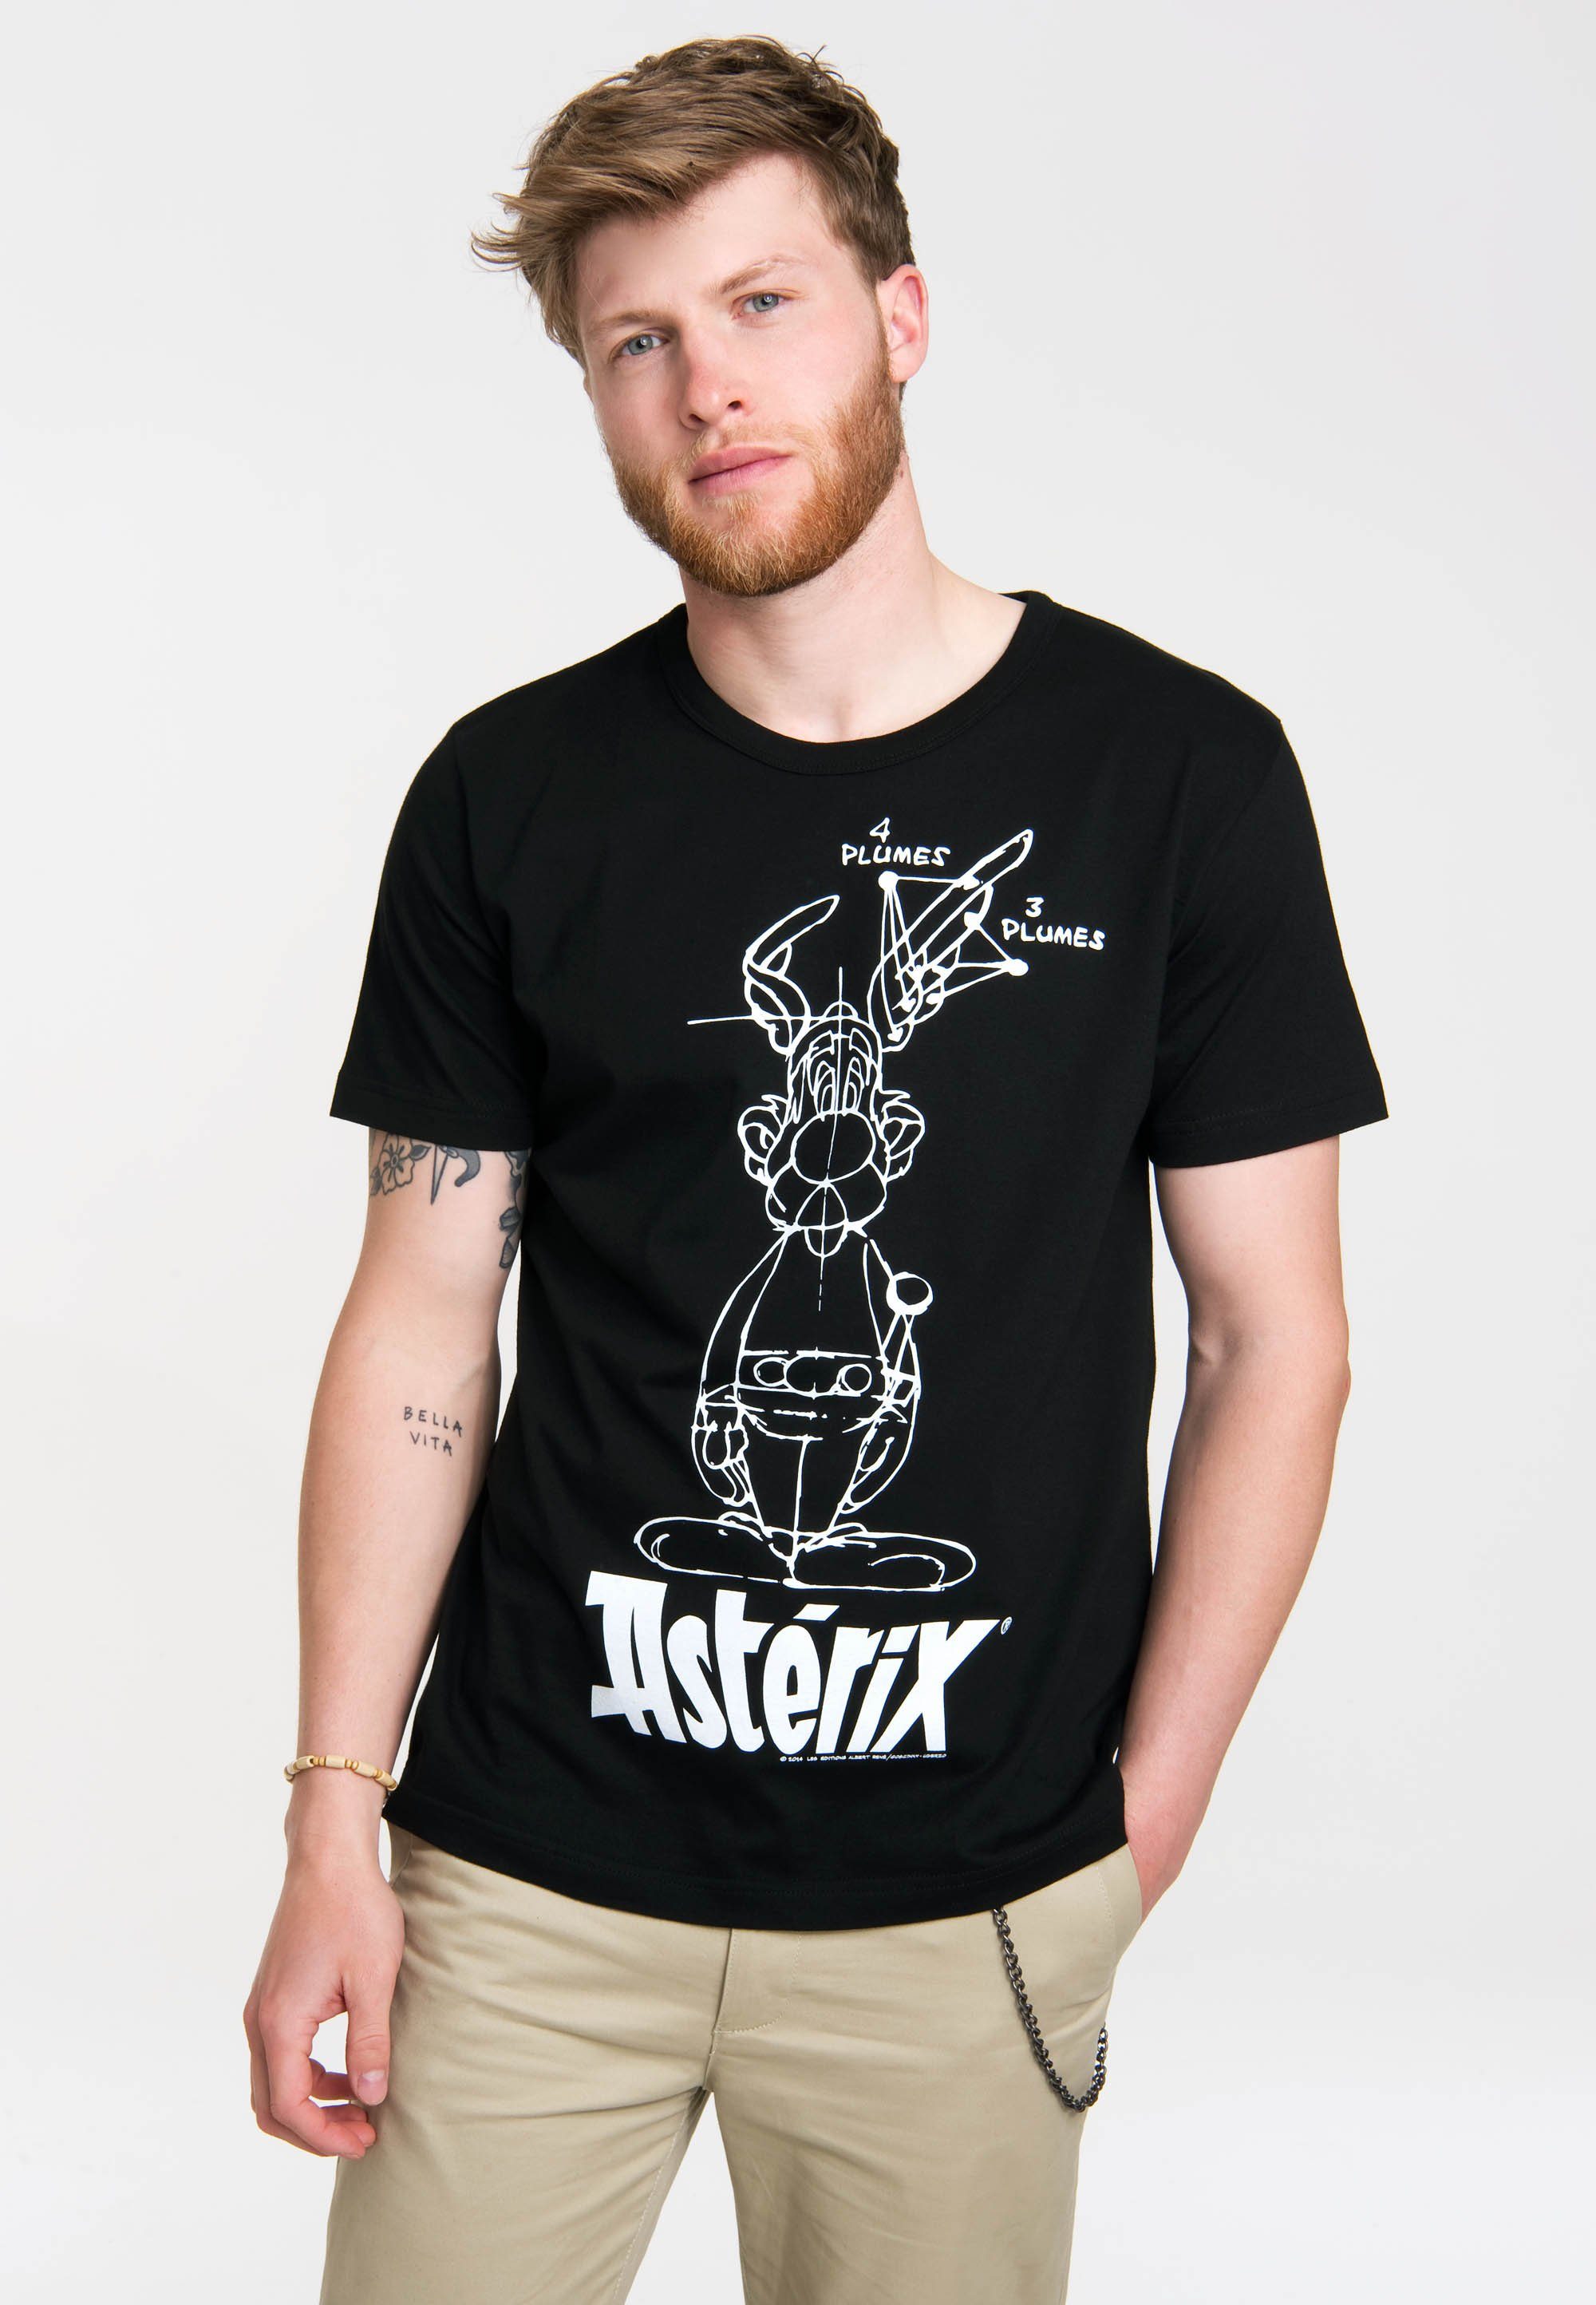 lizenzierten T-Shirt Gallier der Originaldesign Asterix mit LOGOSHIRT